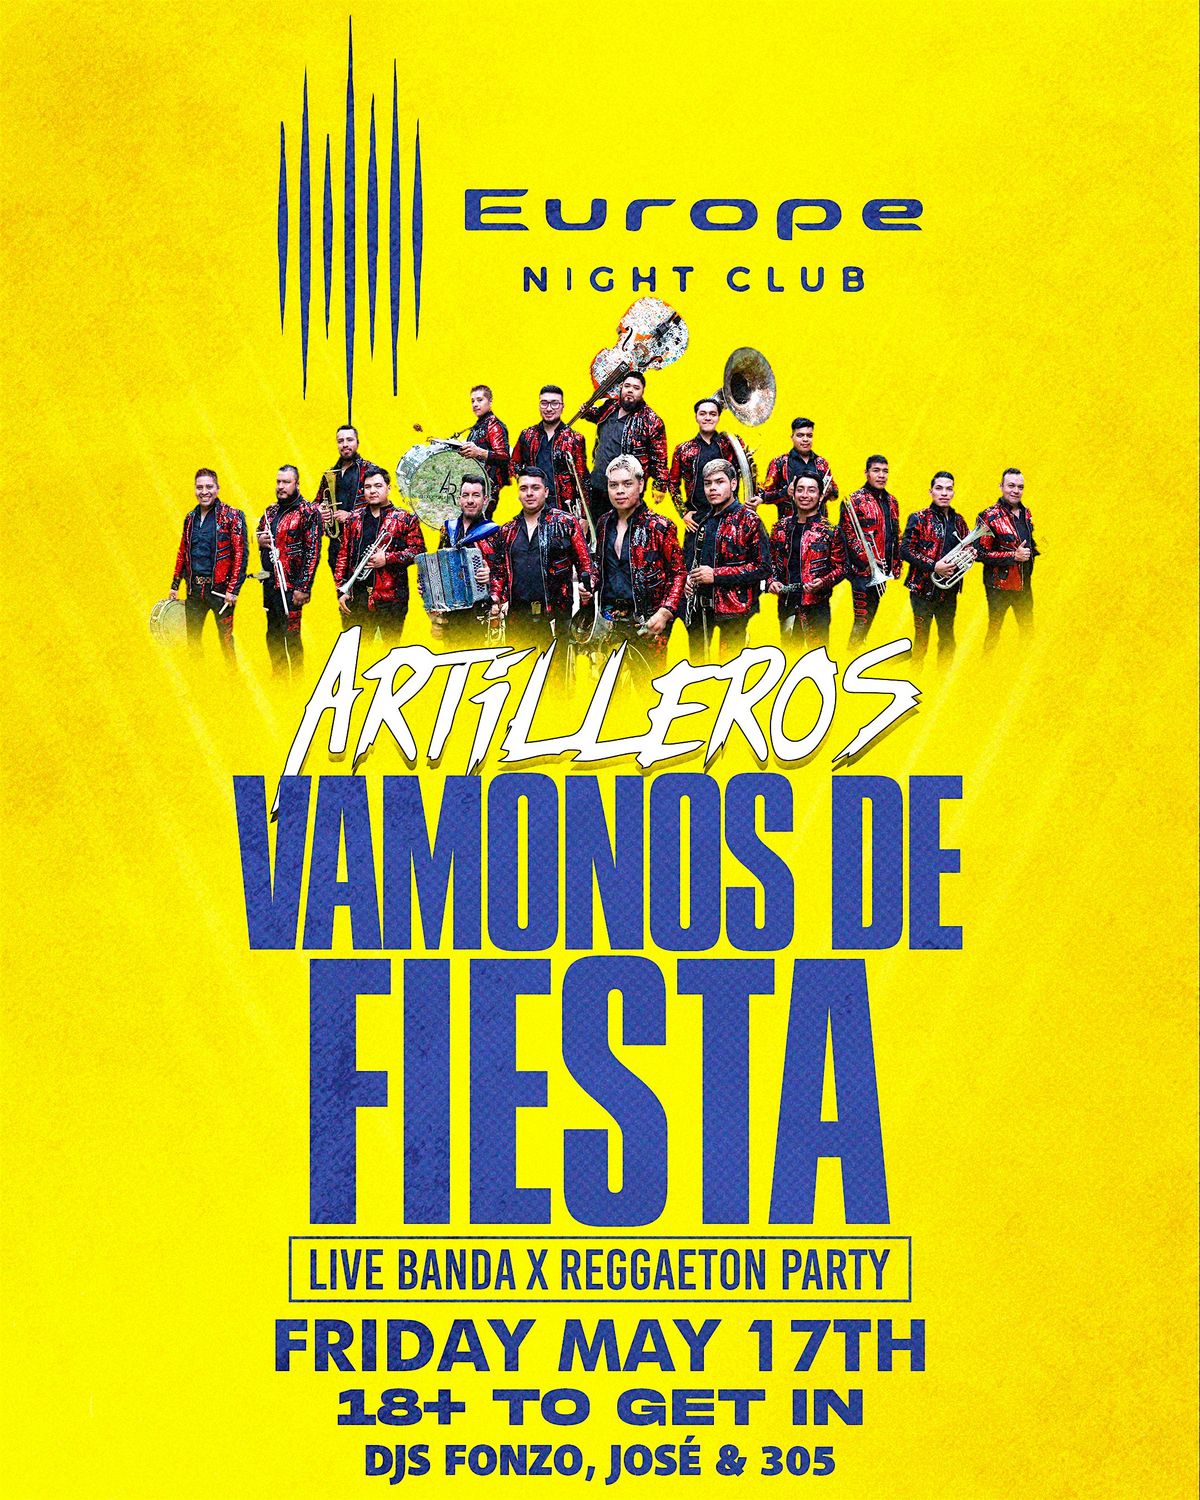 LIVE BANDA X REGGAETON PARTY AT EUROPE 18+ EVENT